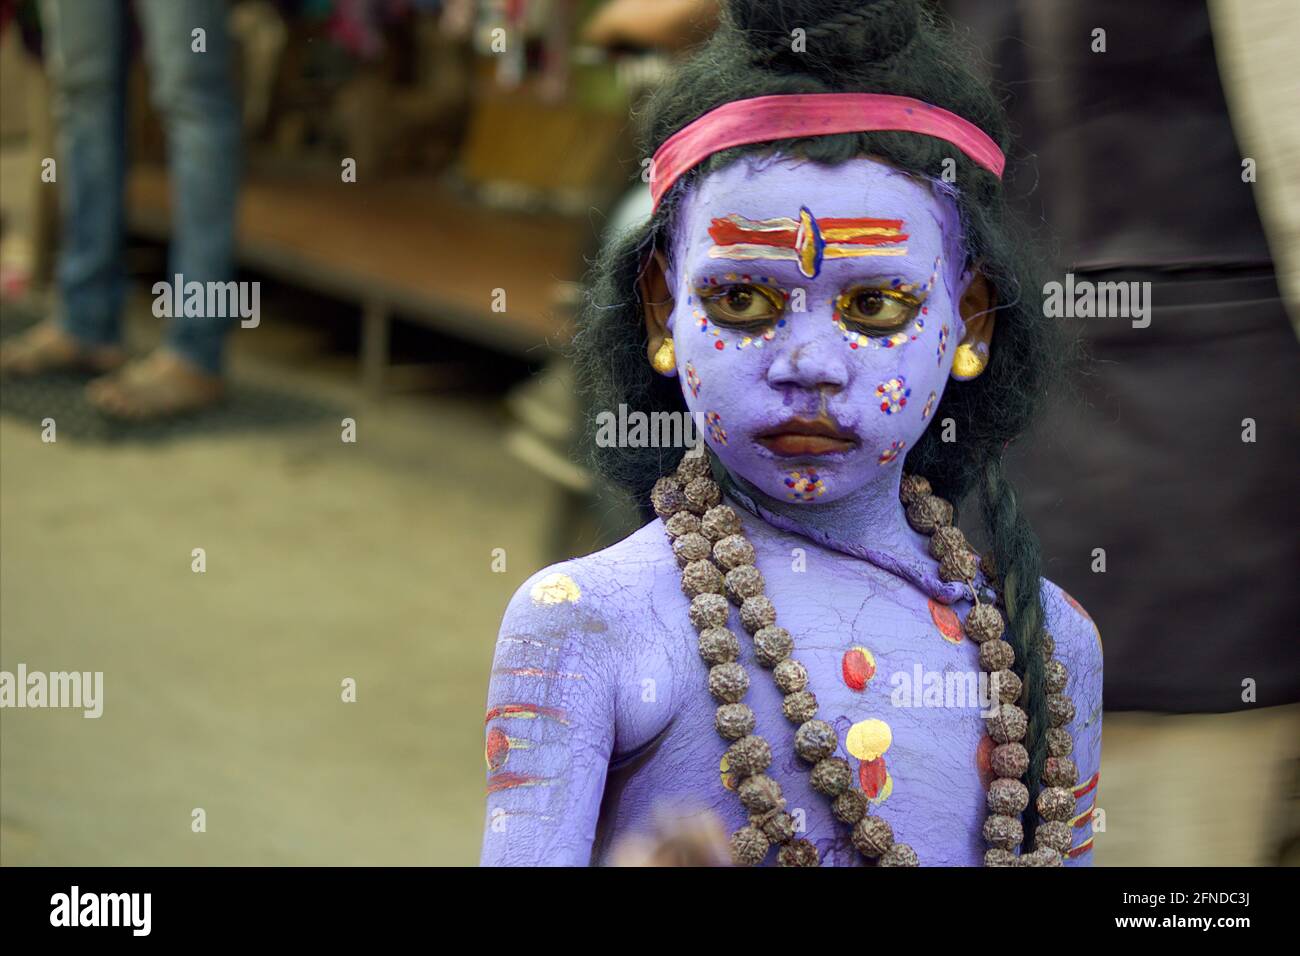 Pushkar, India - November 10, 2016: A little kid boy dressed up or ...